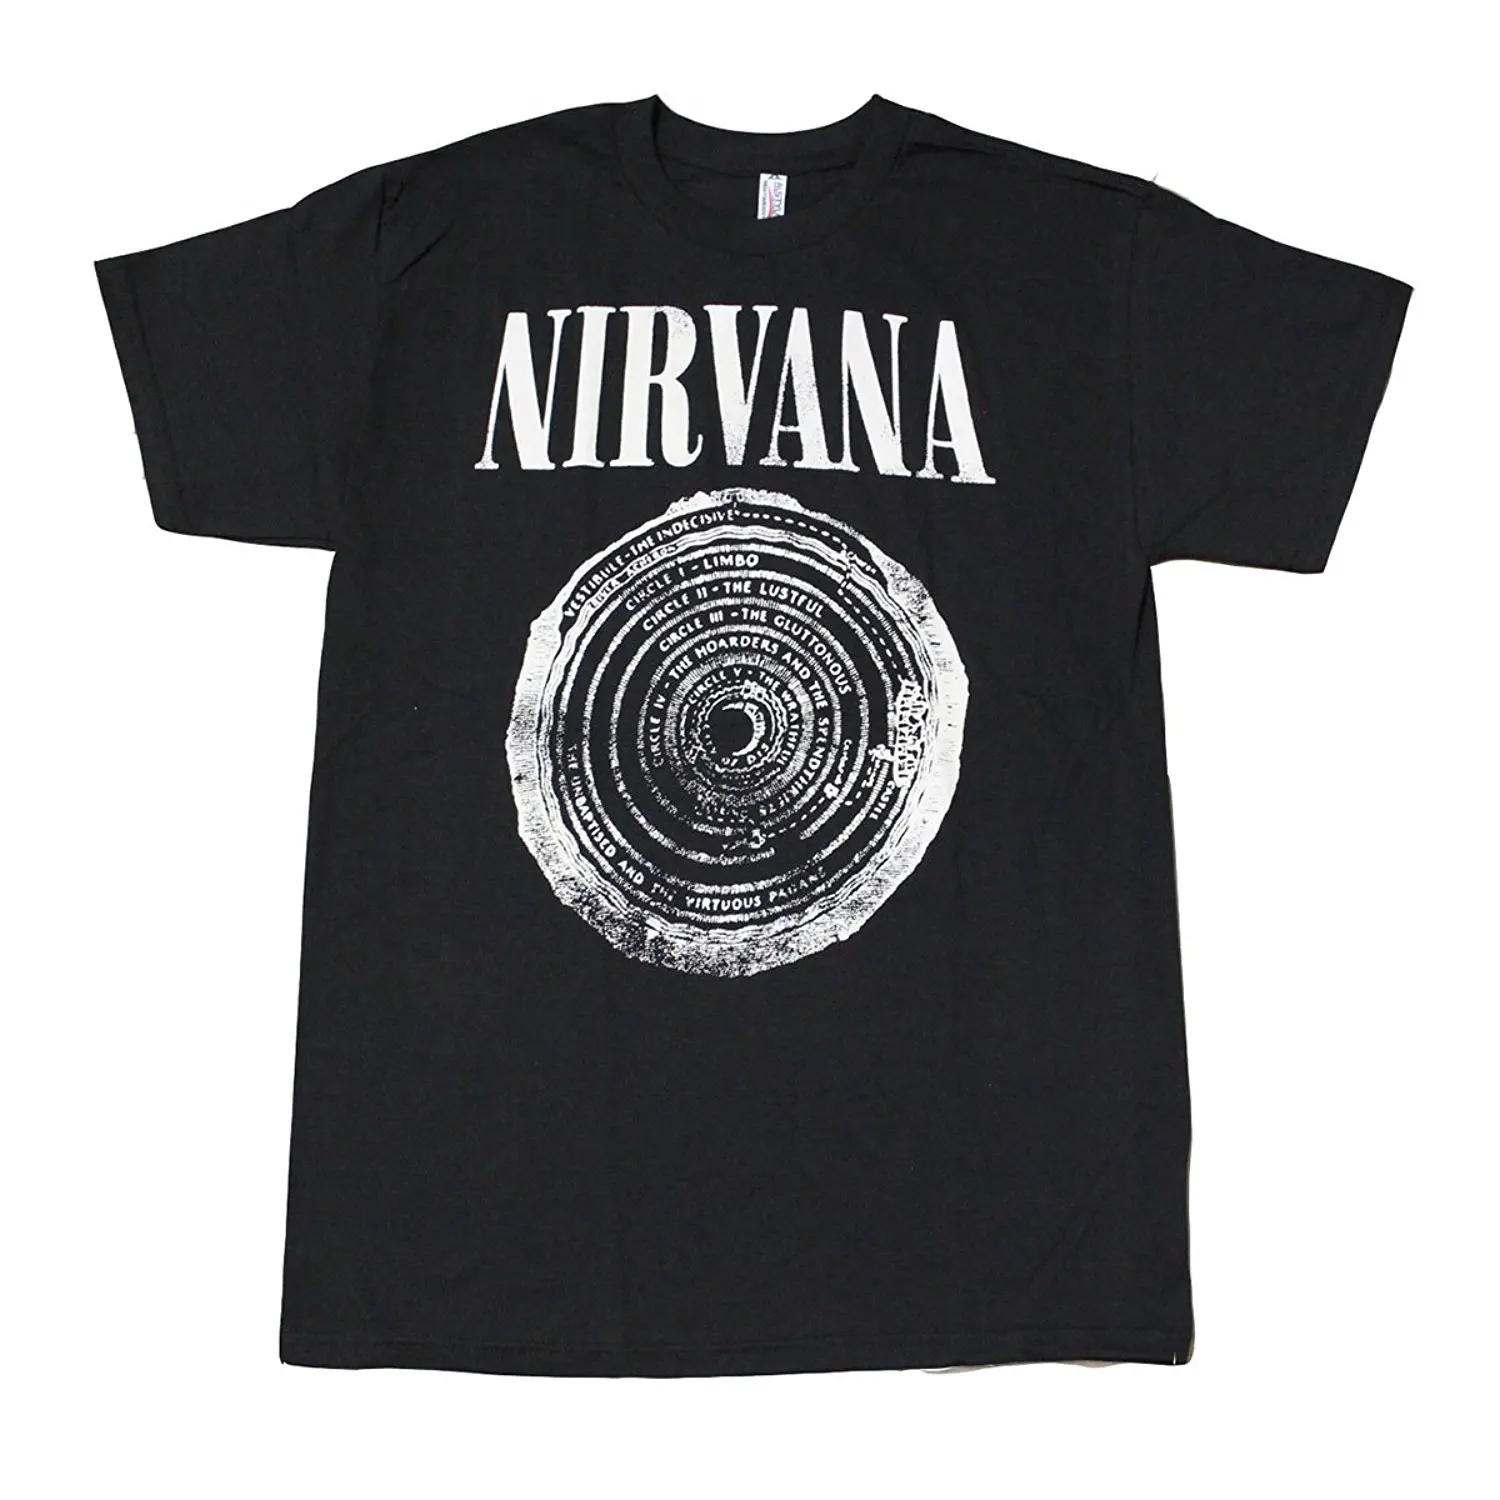 Nirvana t. Майка Nirvana. Футболка Nirvana черная. Футболка Nirvana Lithium. Футболка группы Нирвана.